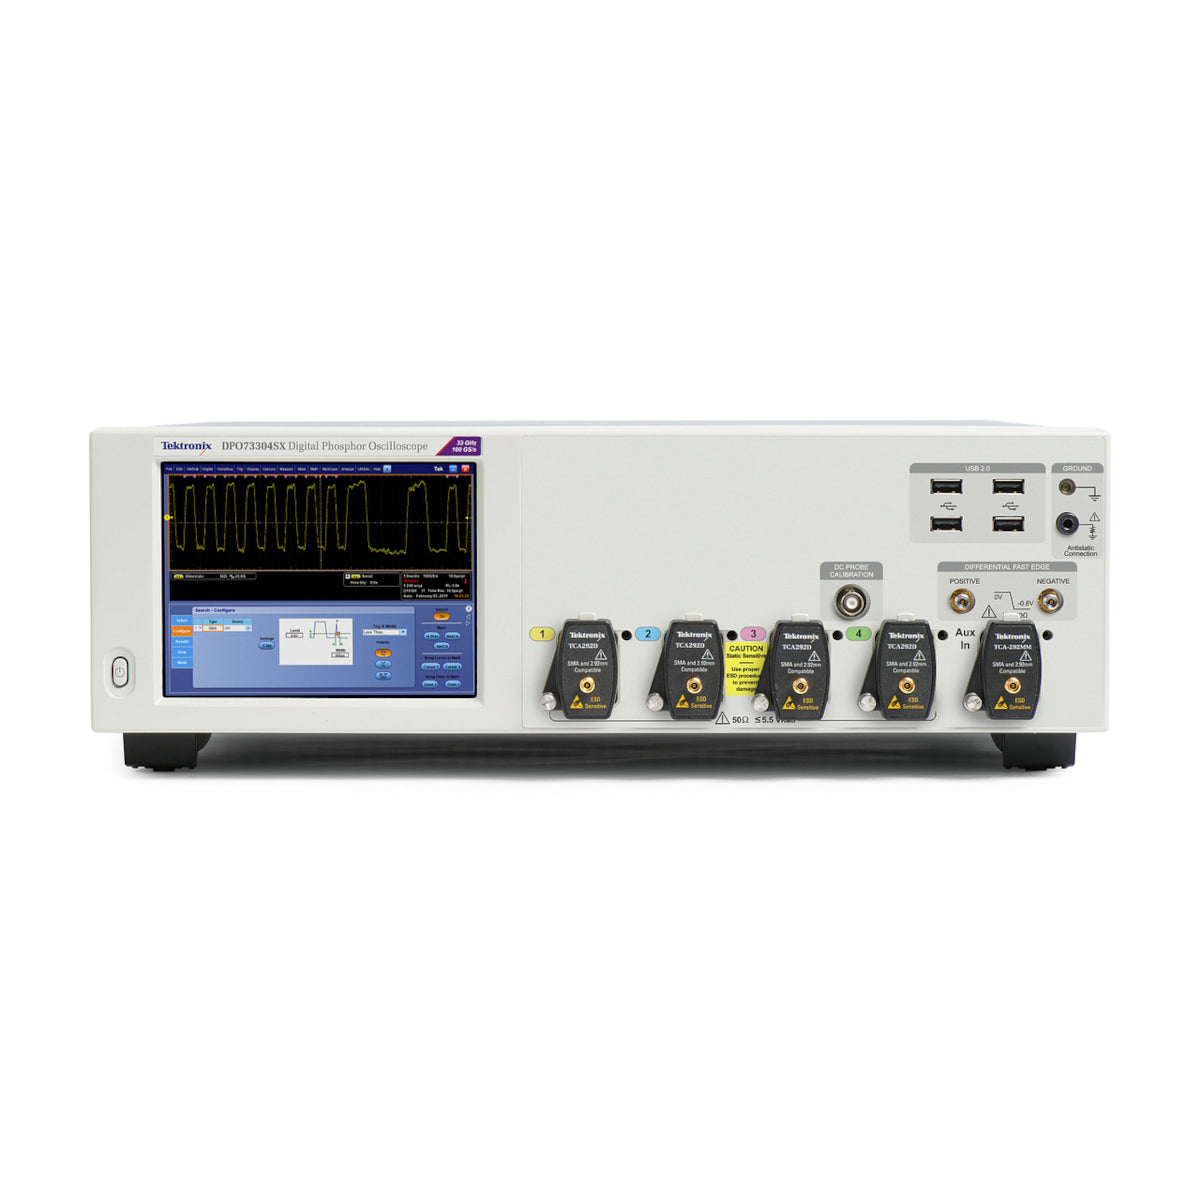 Tektronix DPS73308SX Scalable Performance Oscilloscope